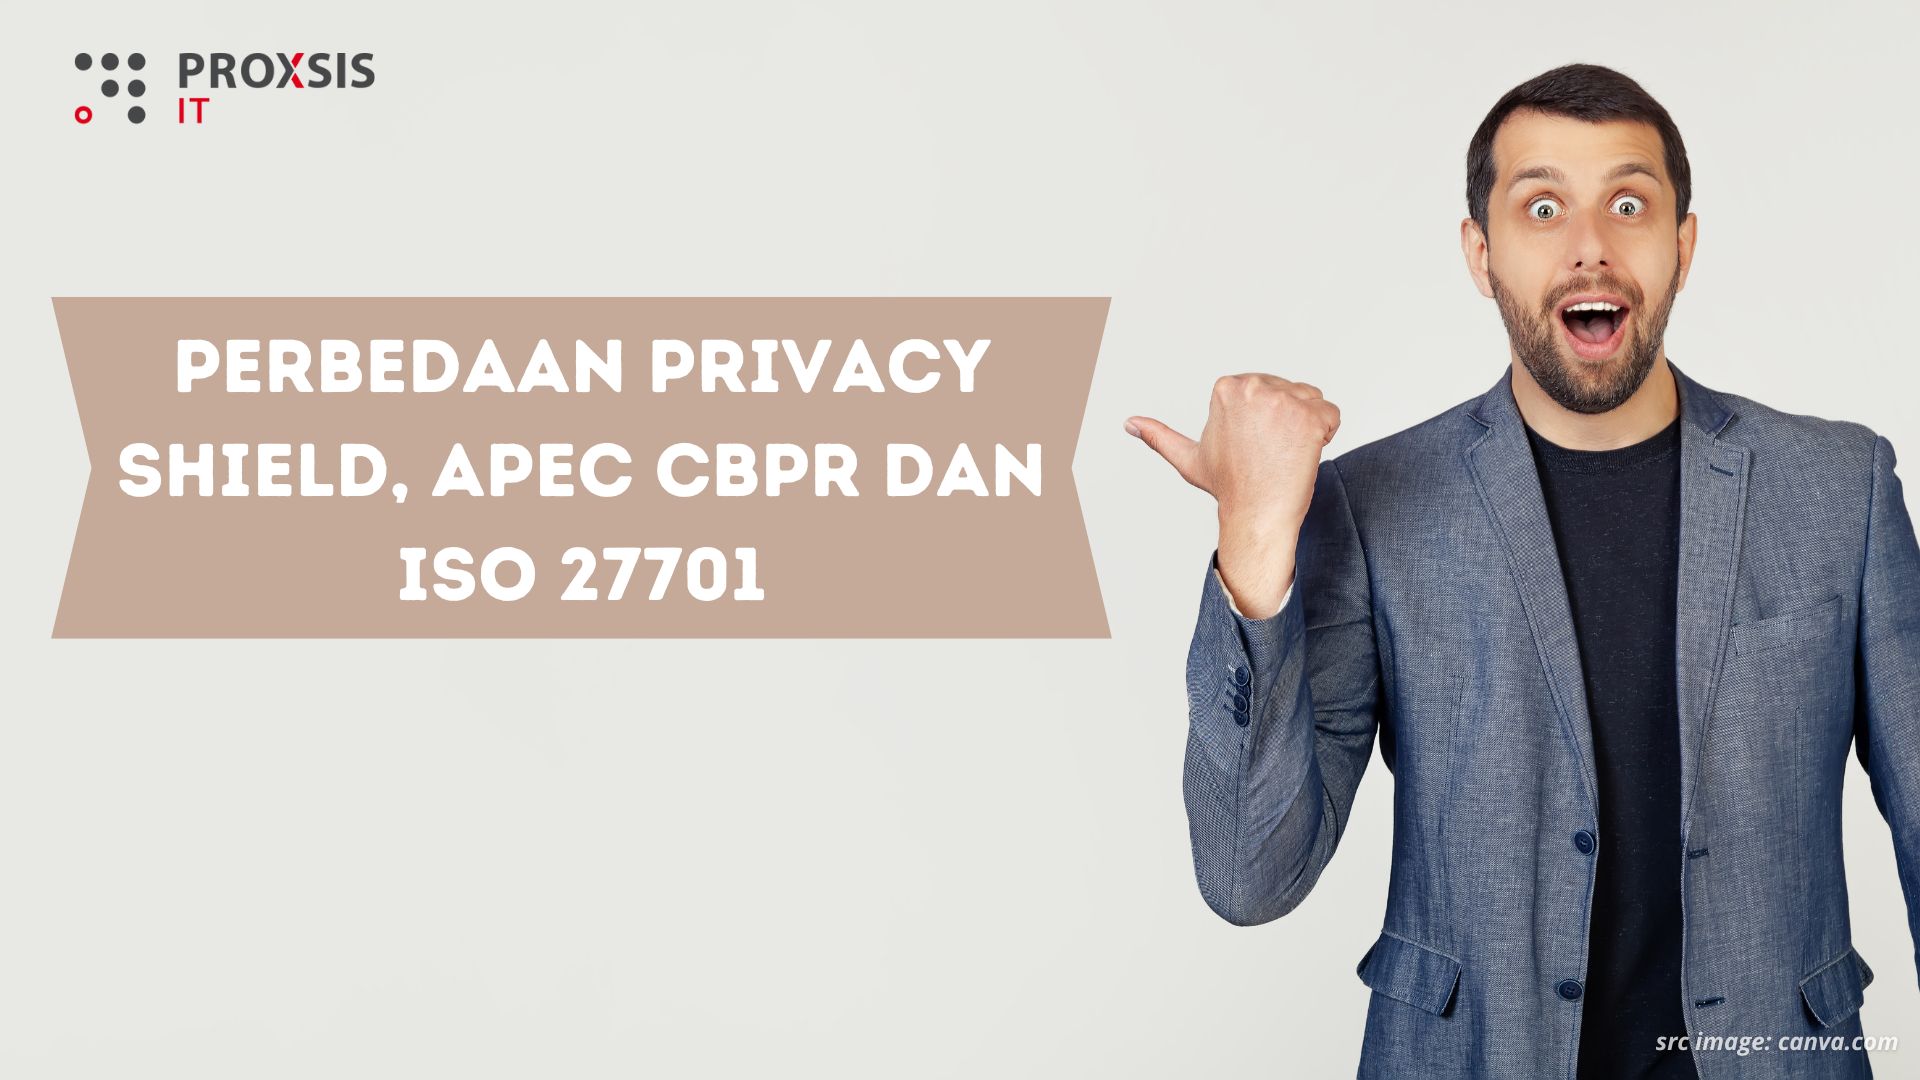 Perbedaan Privacy Shield, APEC CBPR dan ISO 27701